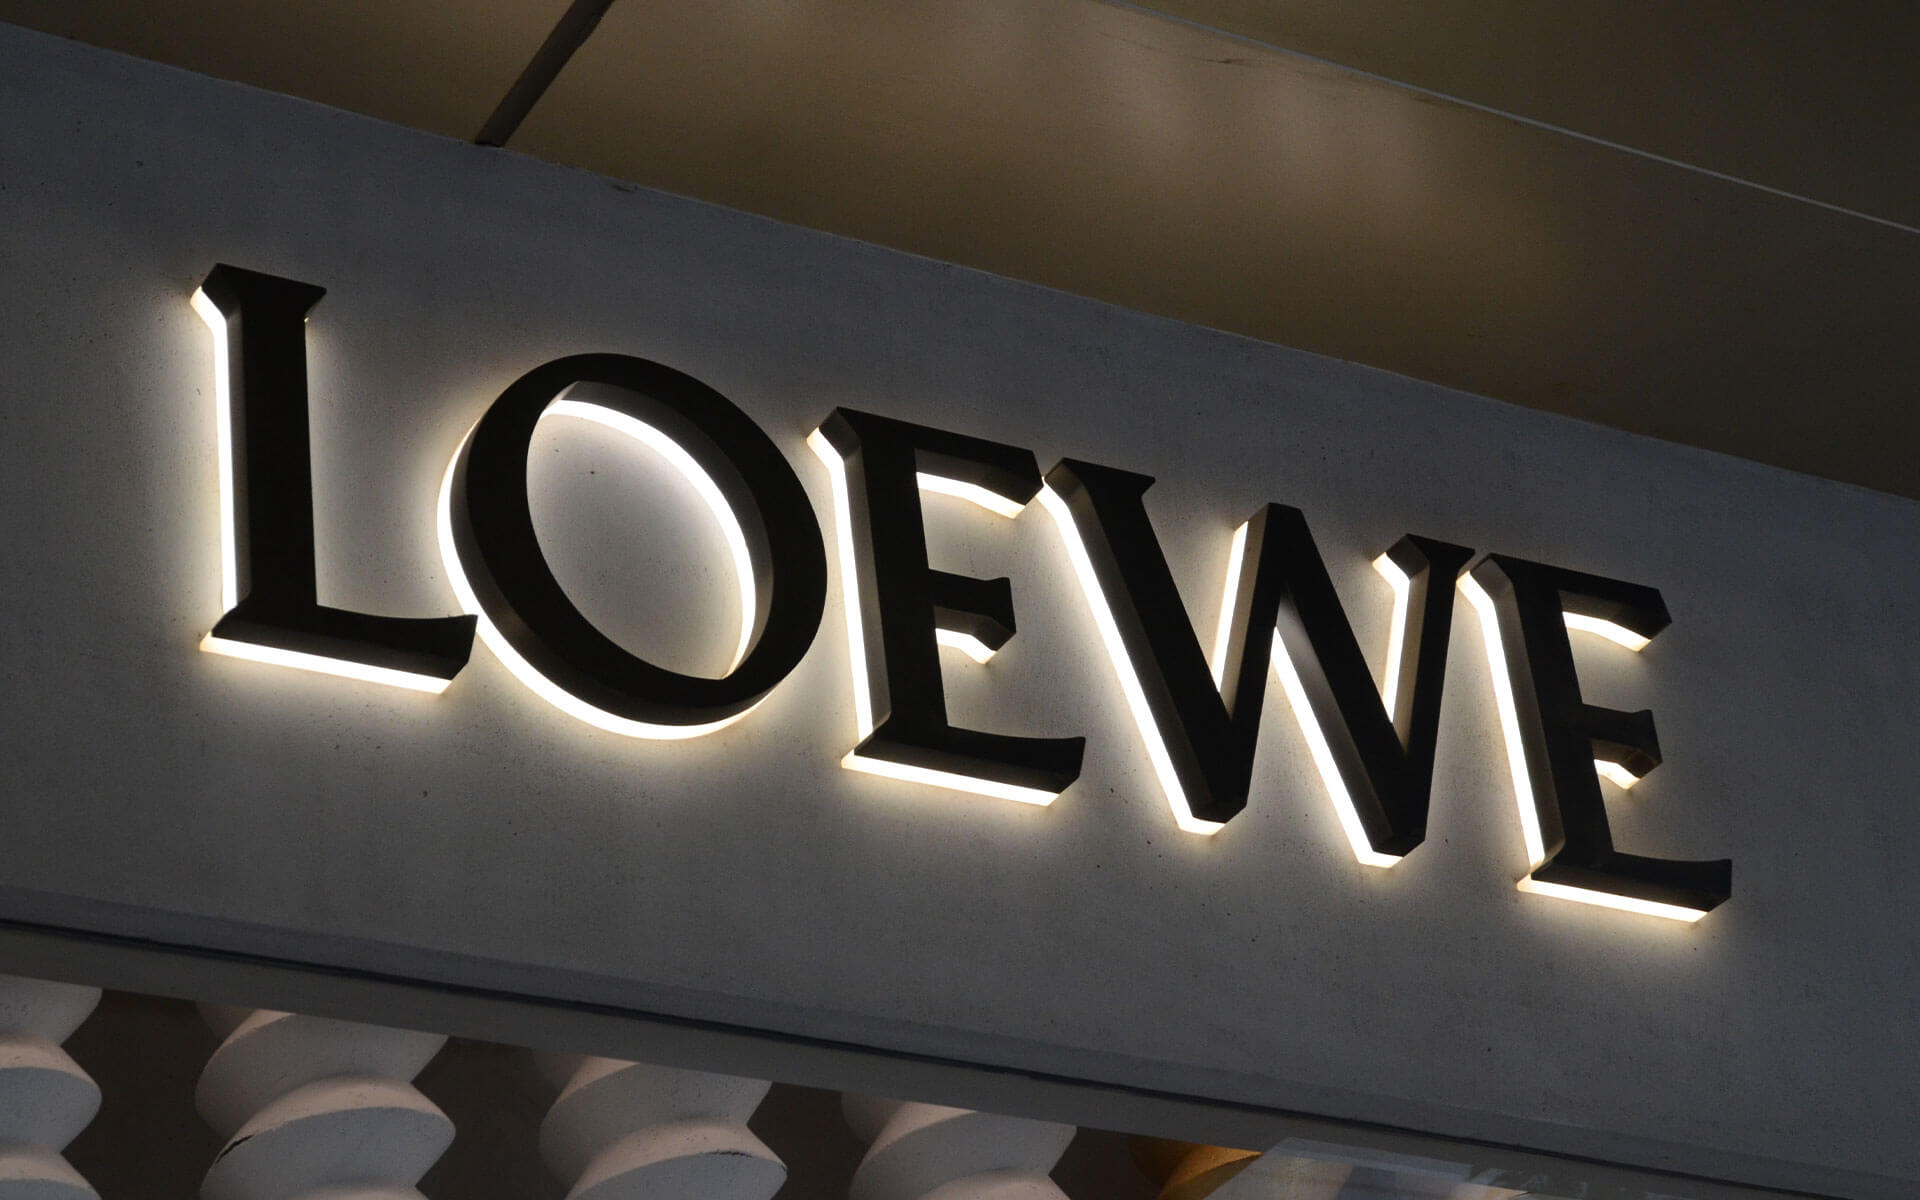 Pro Back-lit Metal Channel Letters for Loewe